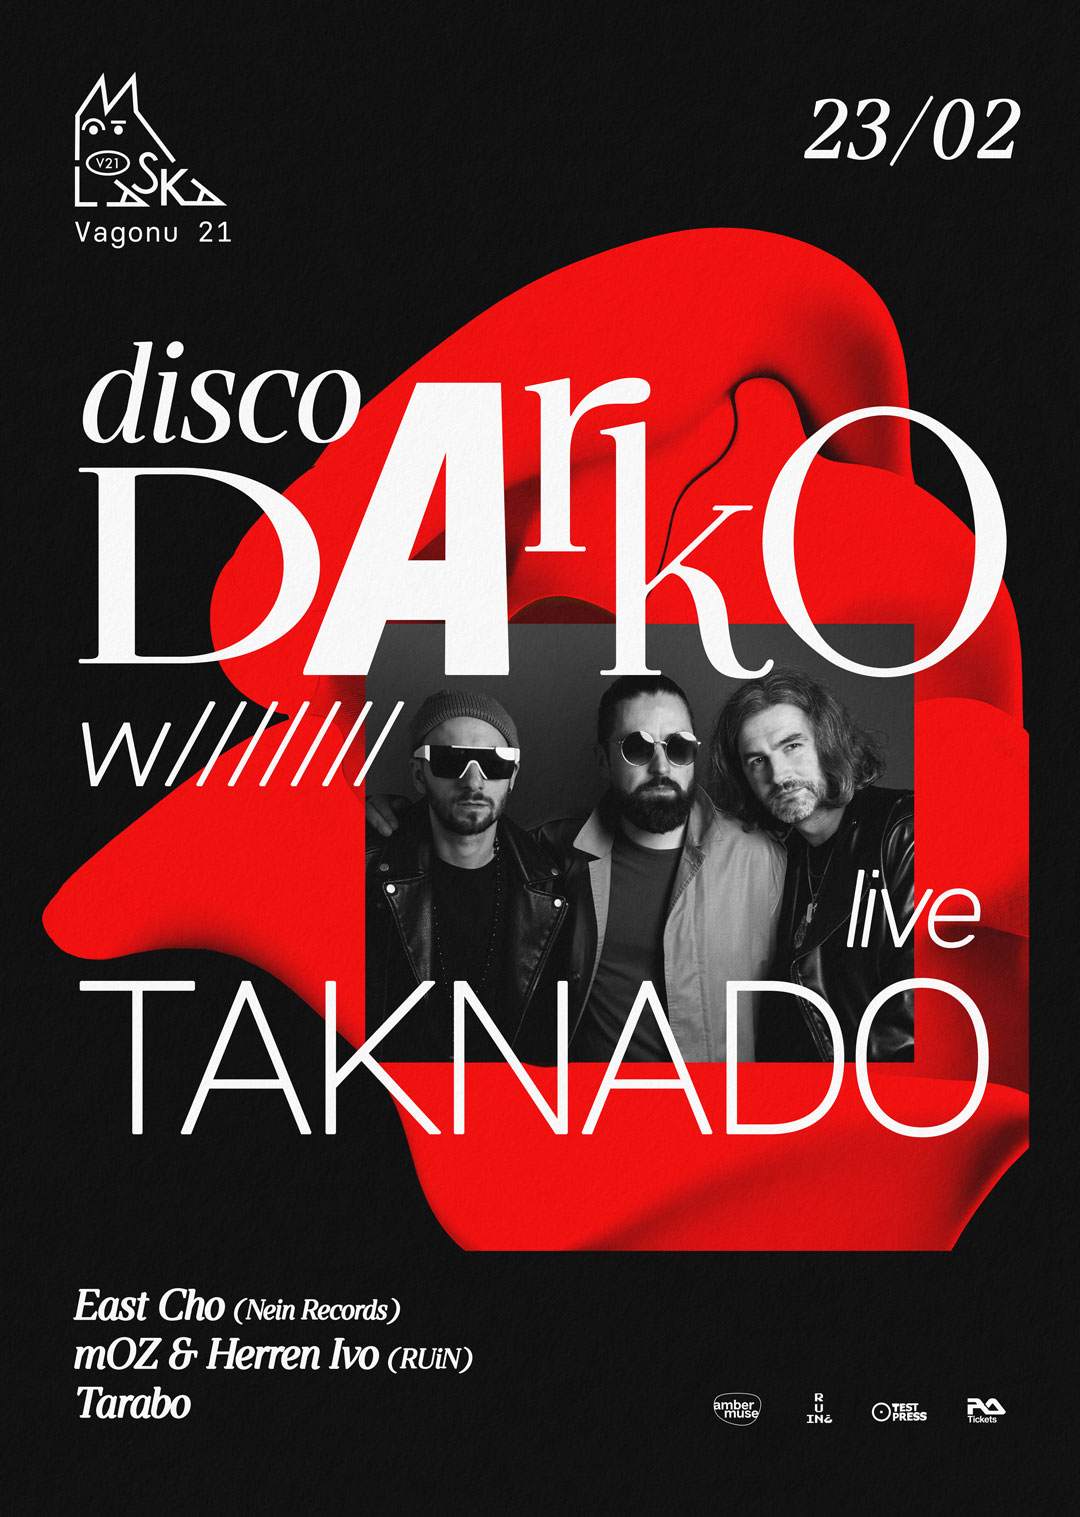 Disco Darko: TAKNADO live - フライヤー表